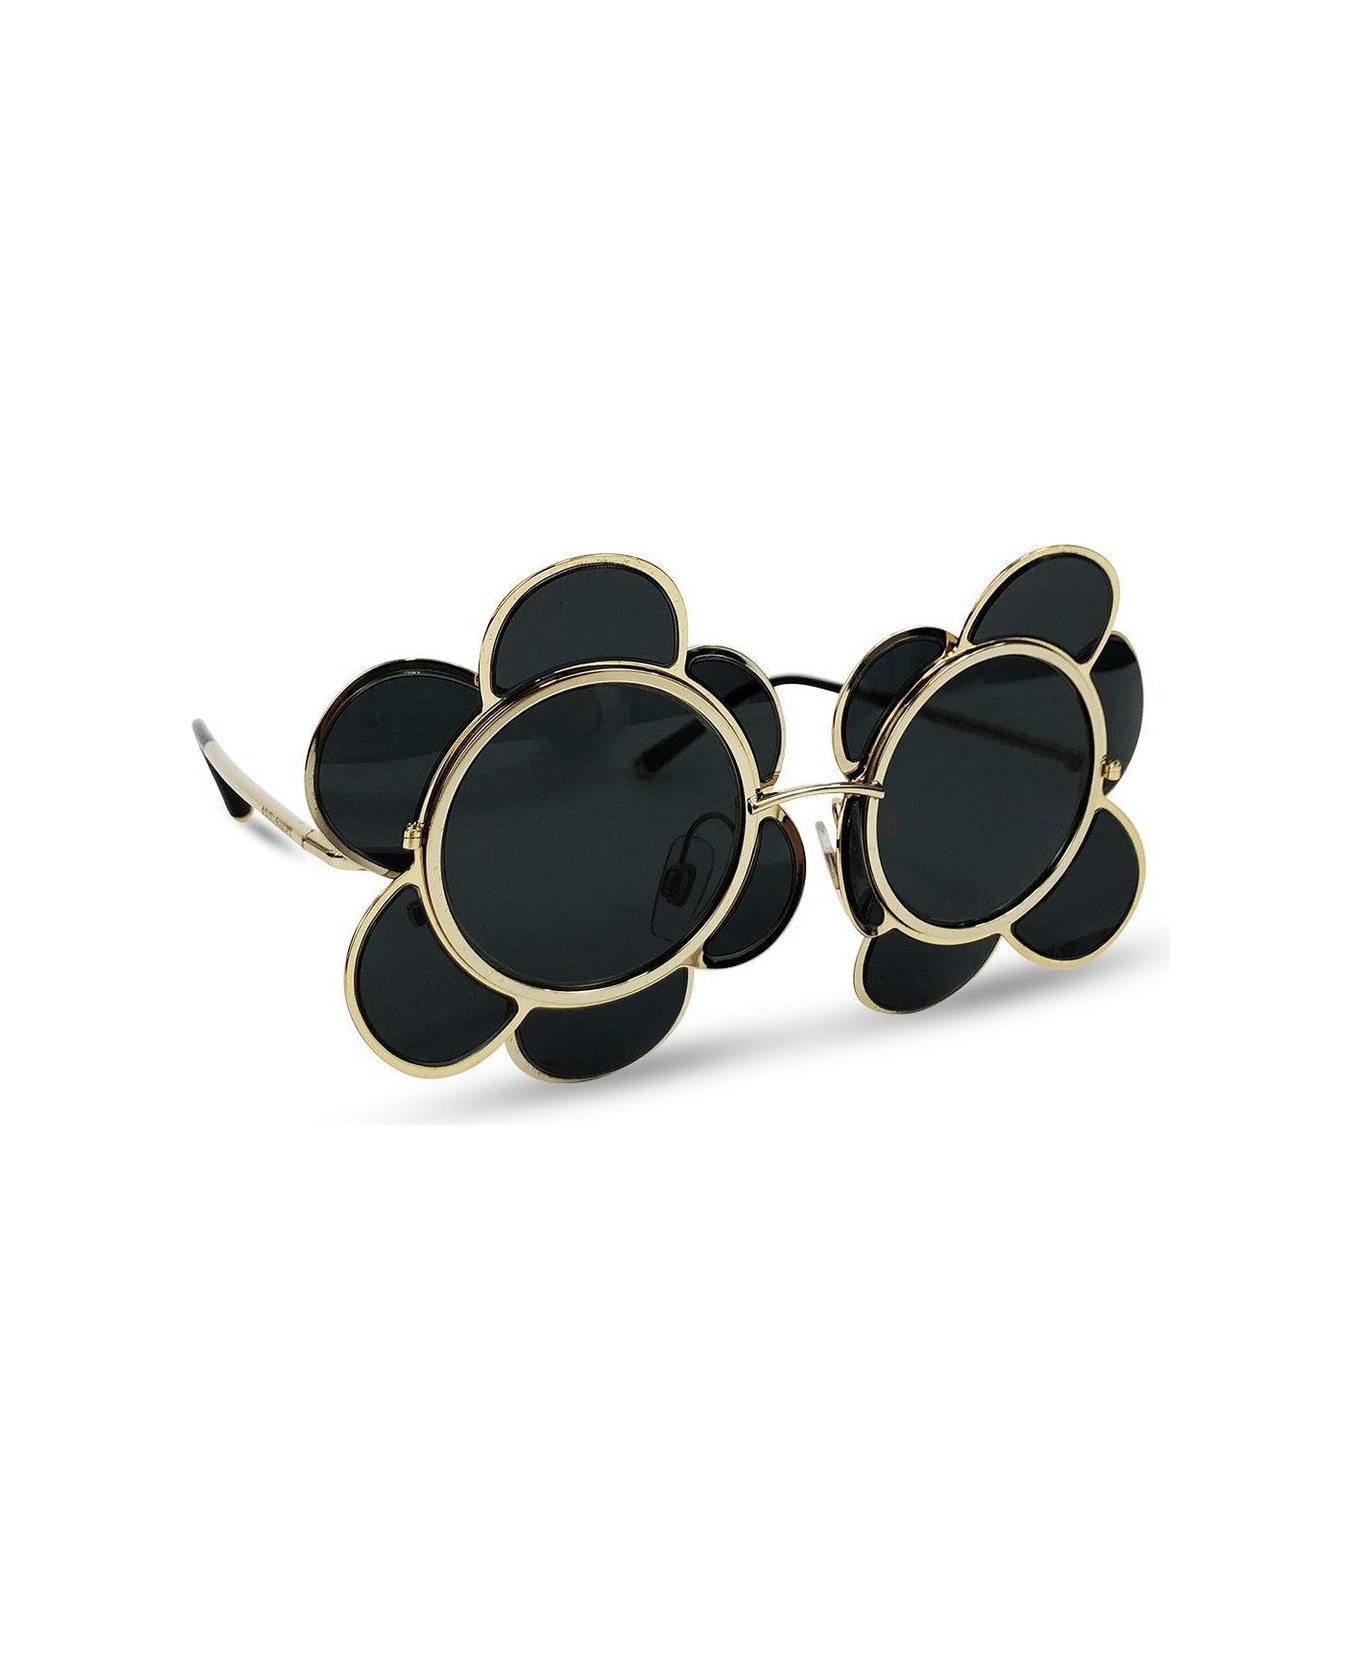 Dolce & Gabbana Special Edition Flower Sunglasses - Black